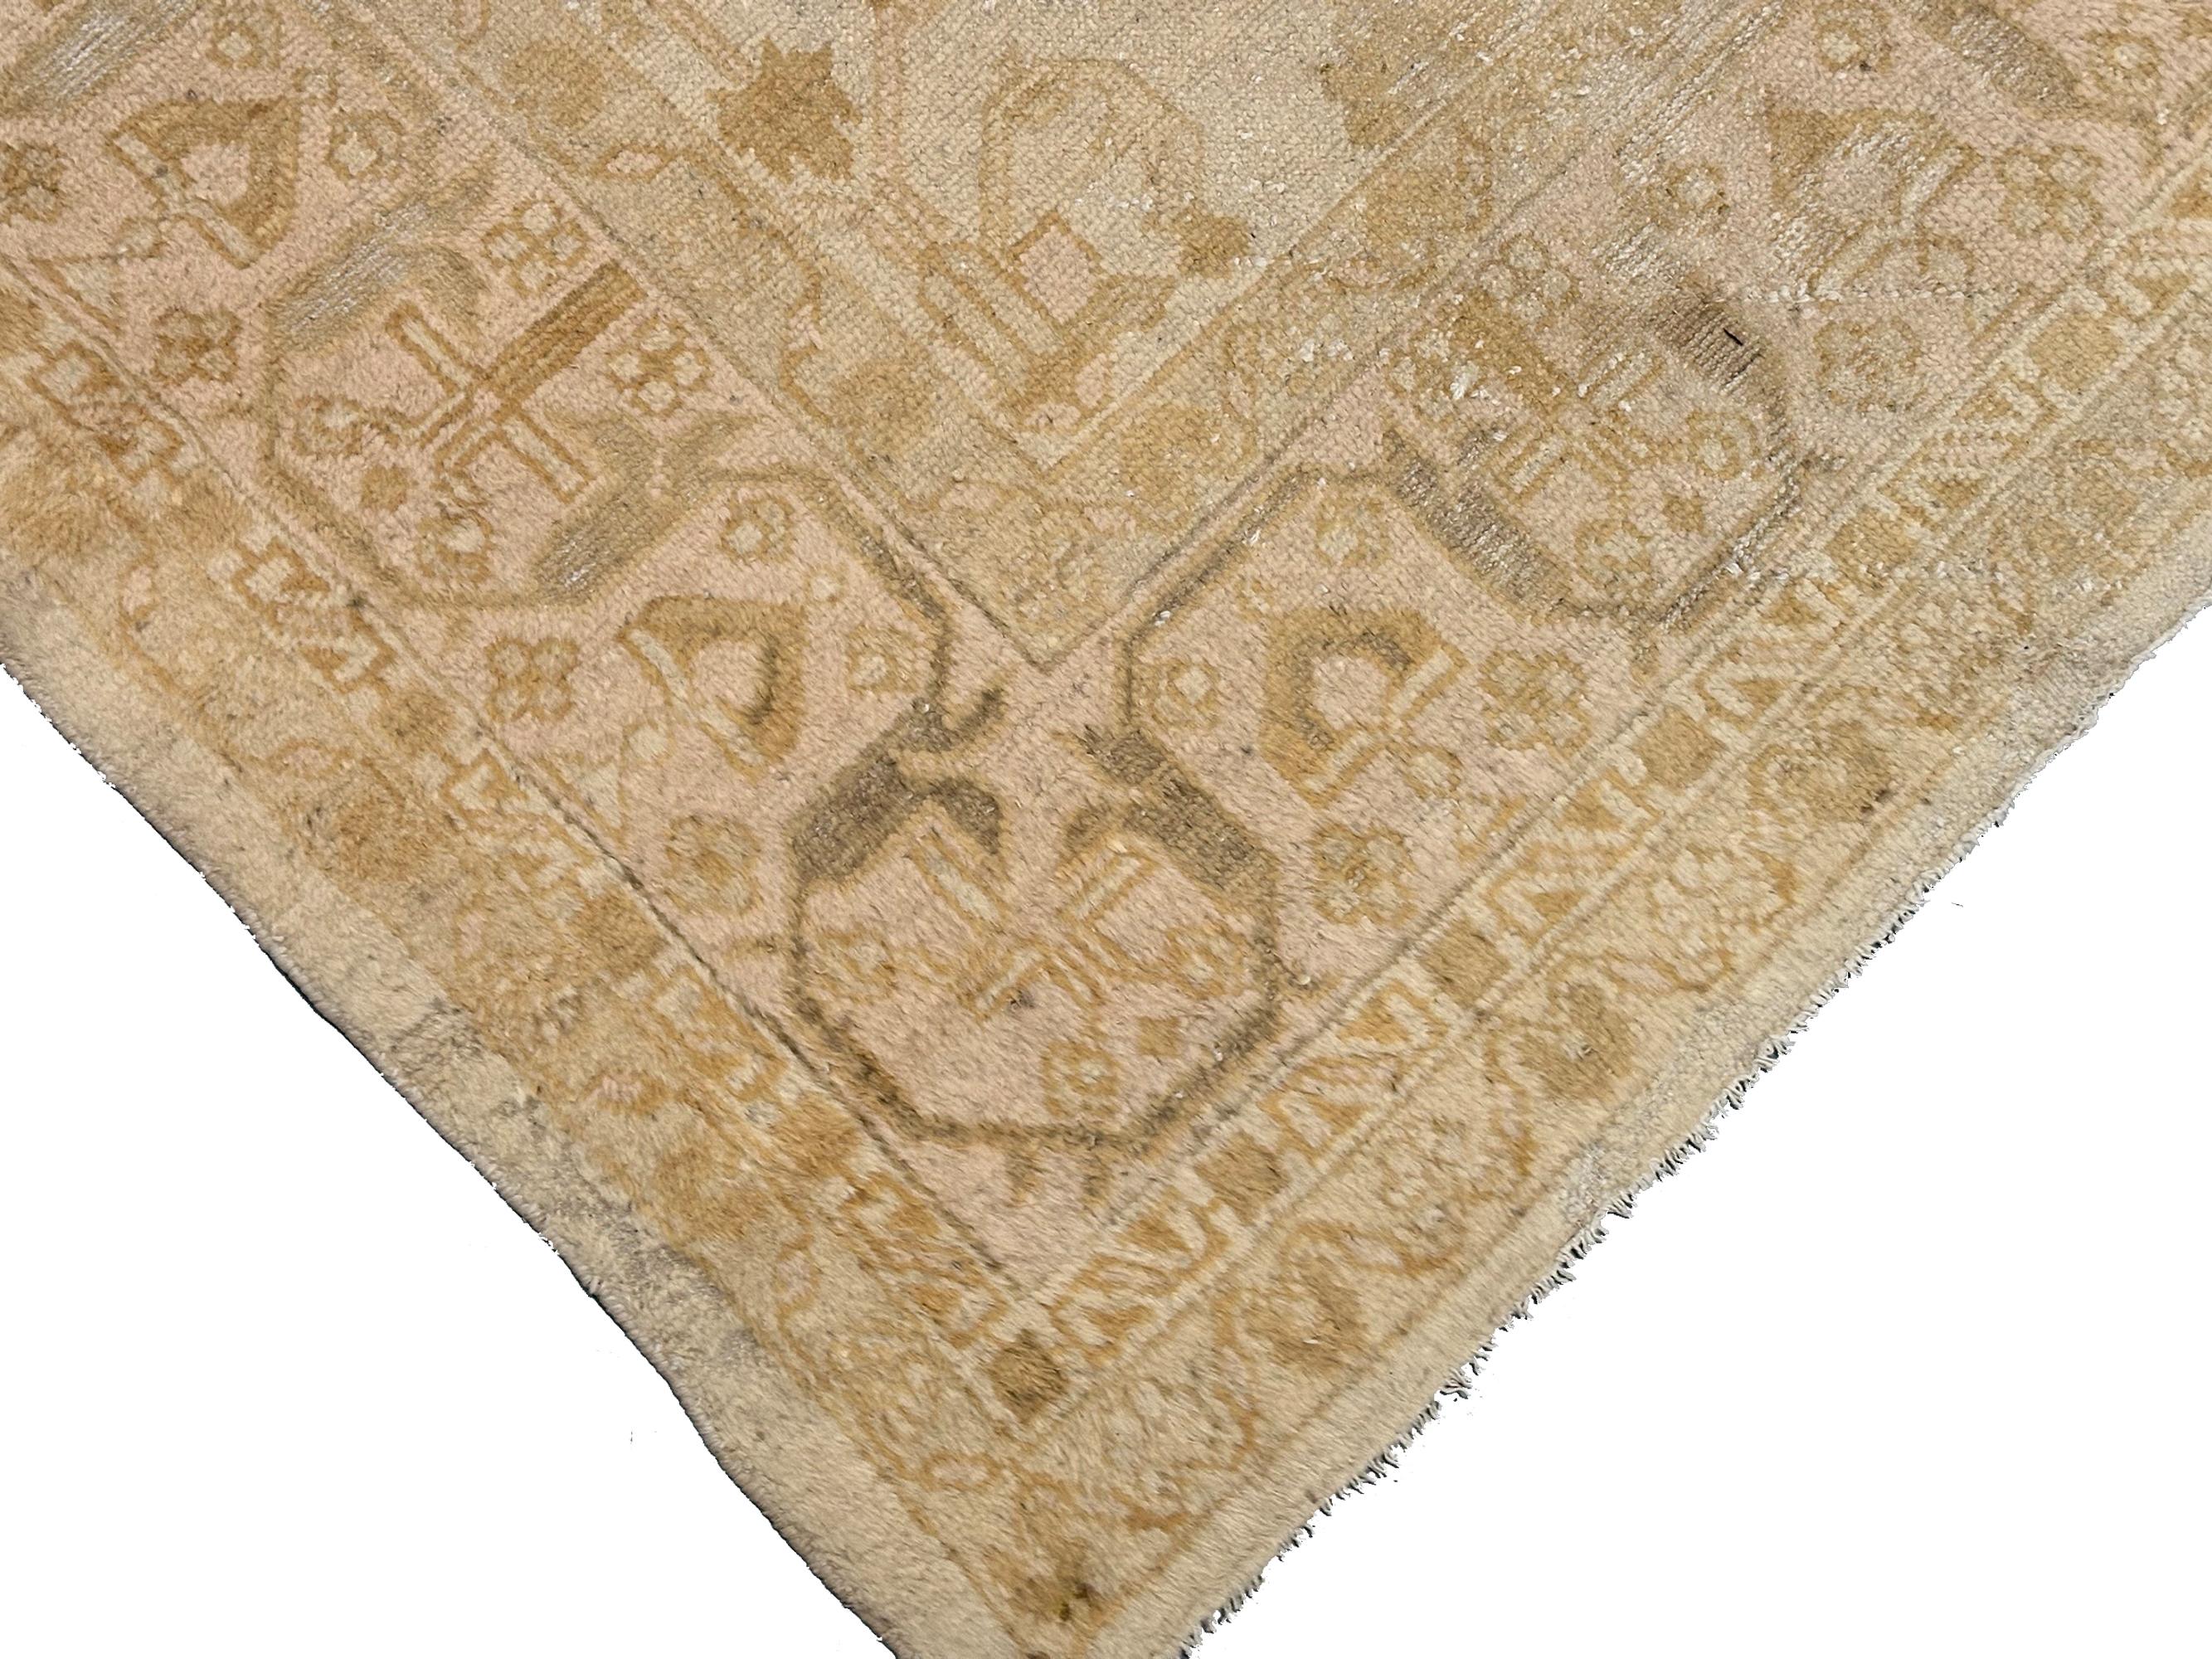 Late 19th Century 1880 Auhtentic Antique Turkish Oushak Geometric overall 12x15 366cm x 442cm For Sale